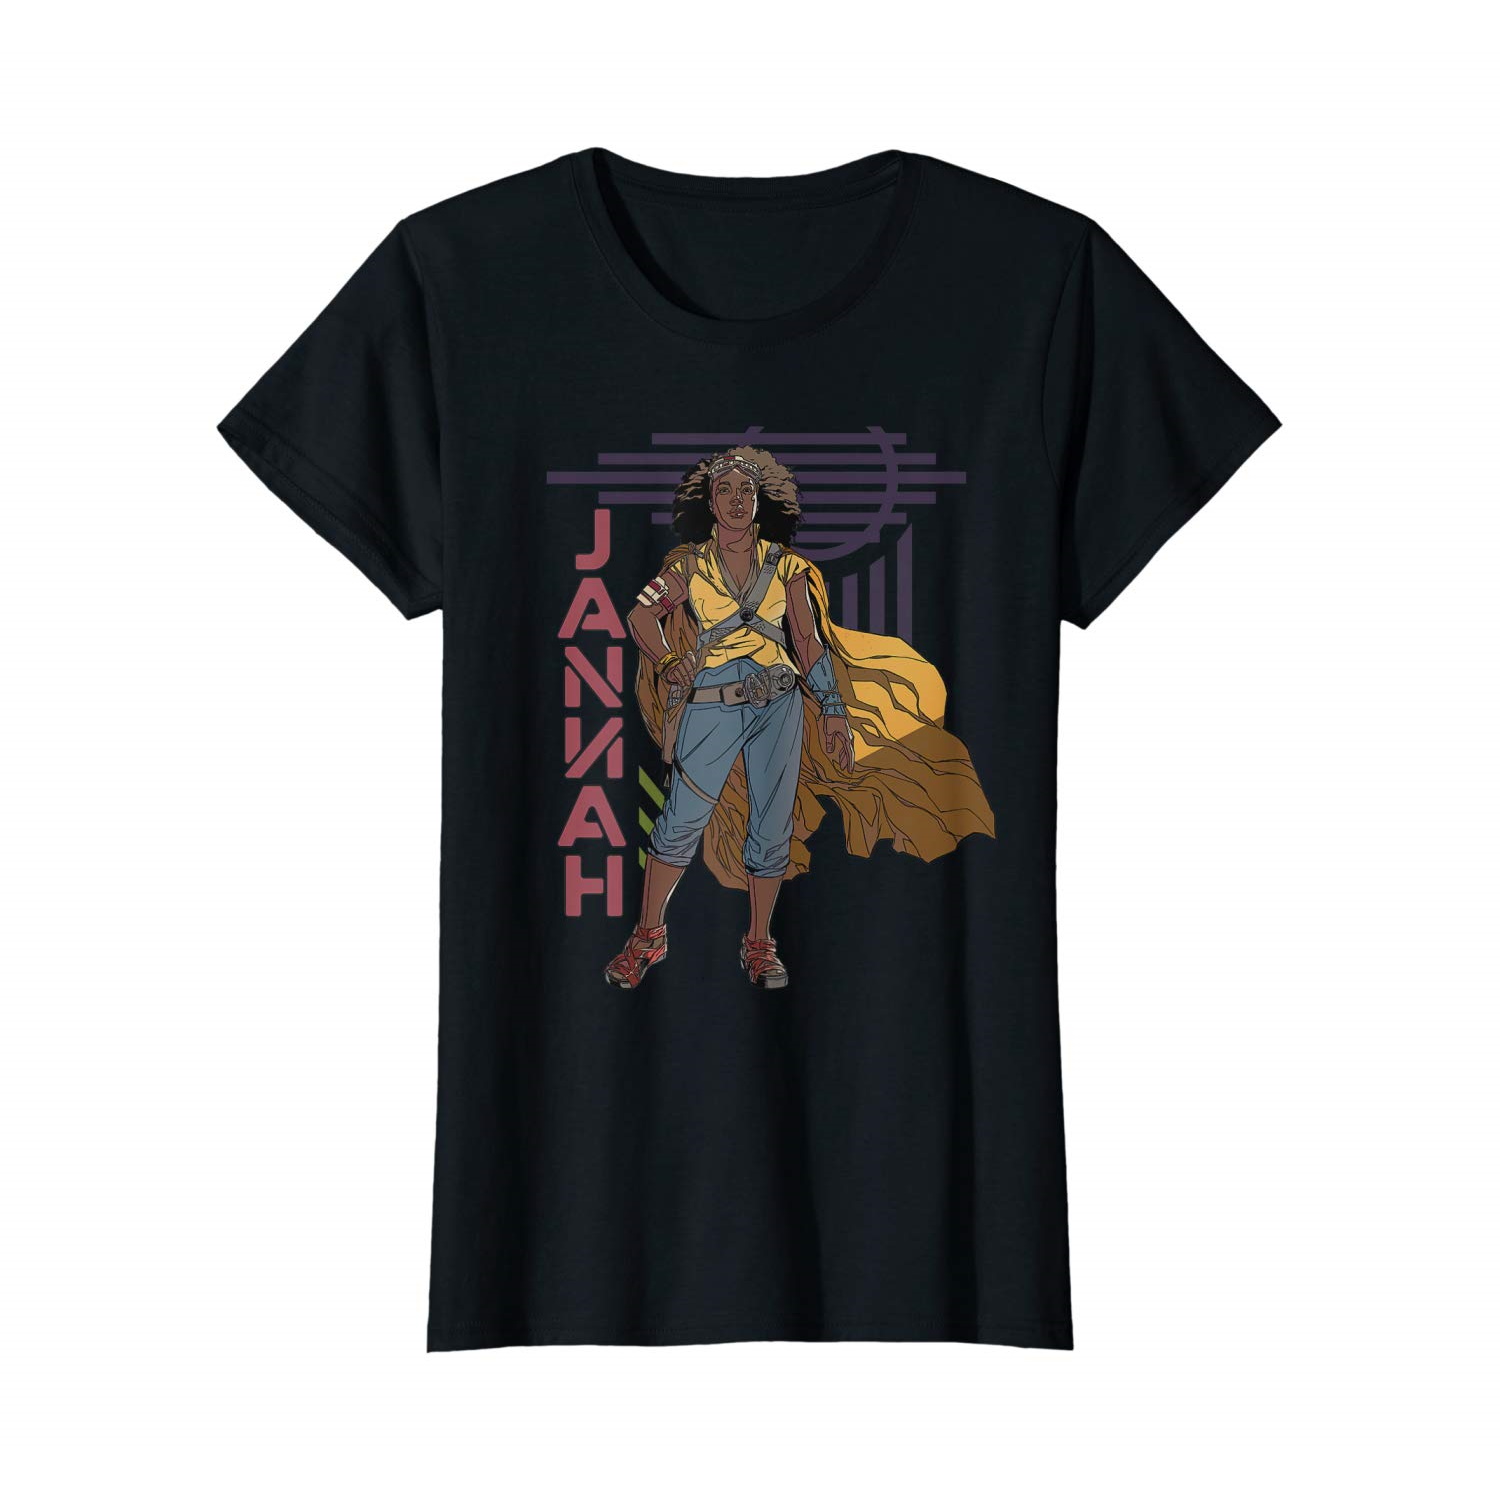 Women's Star Wars Episode 9 Jannah T-Shirts on Amazon